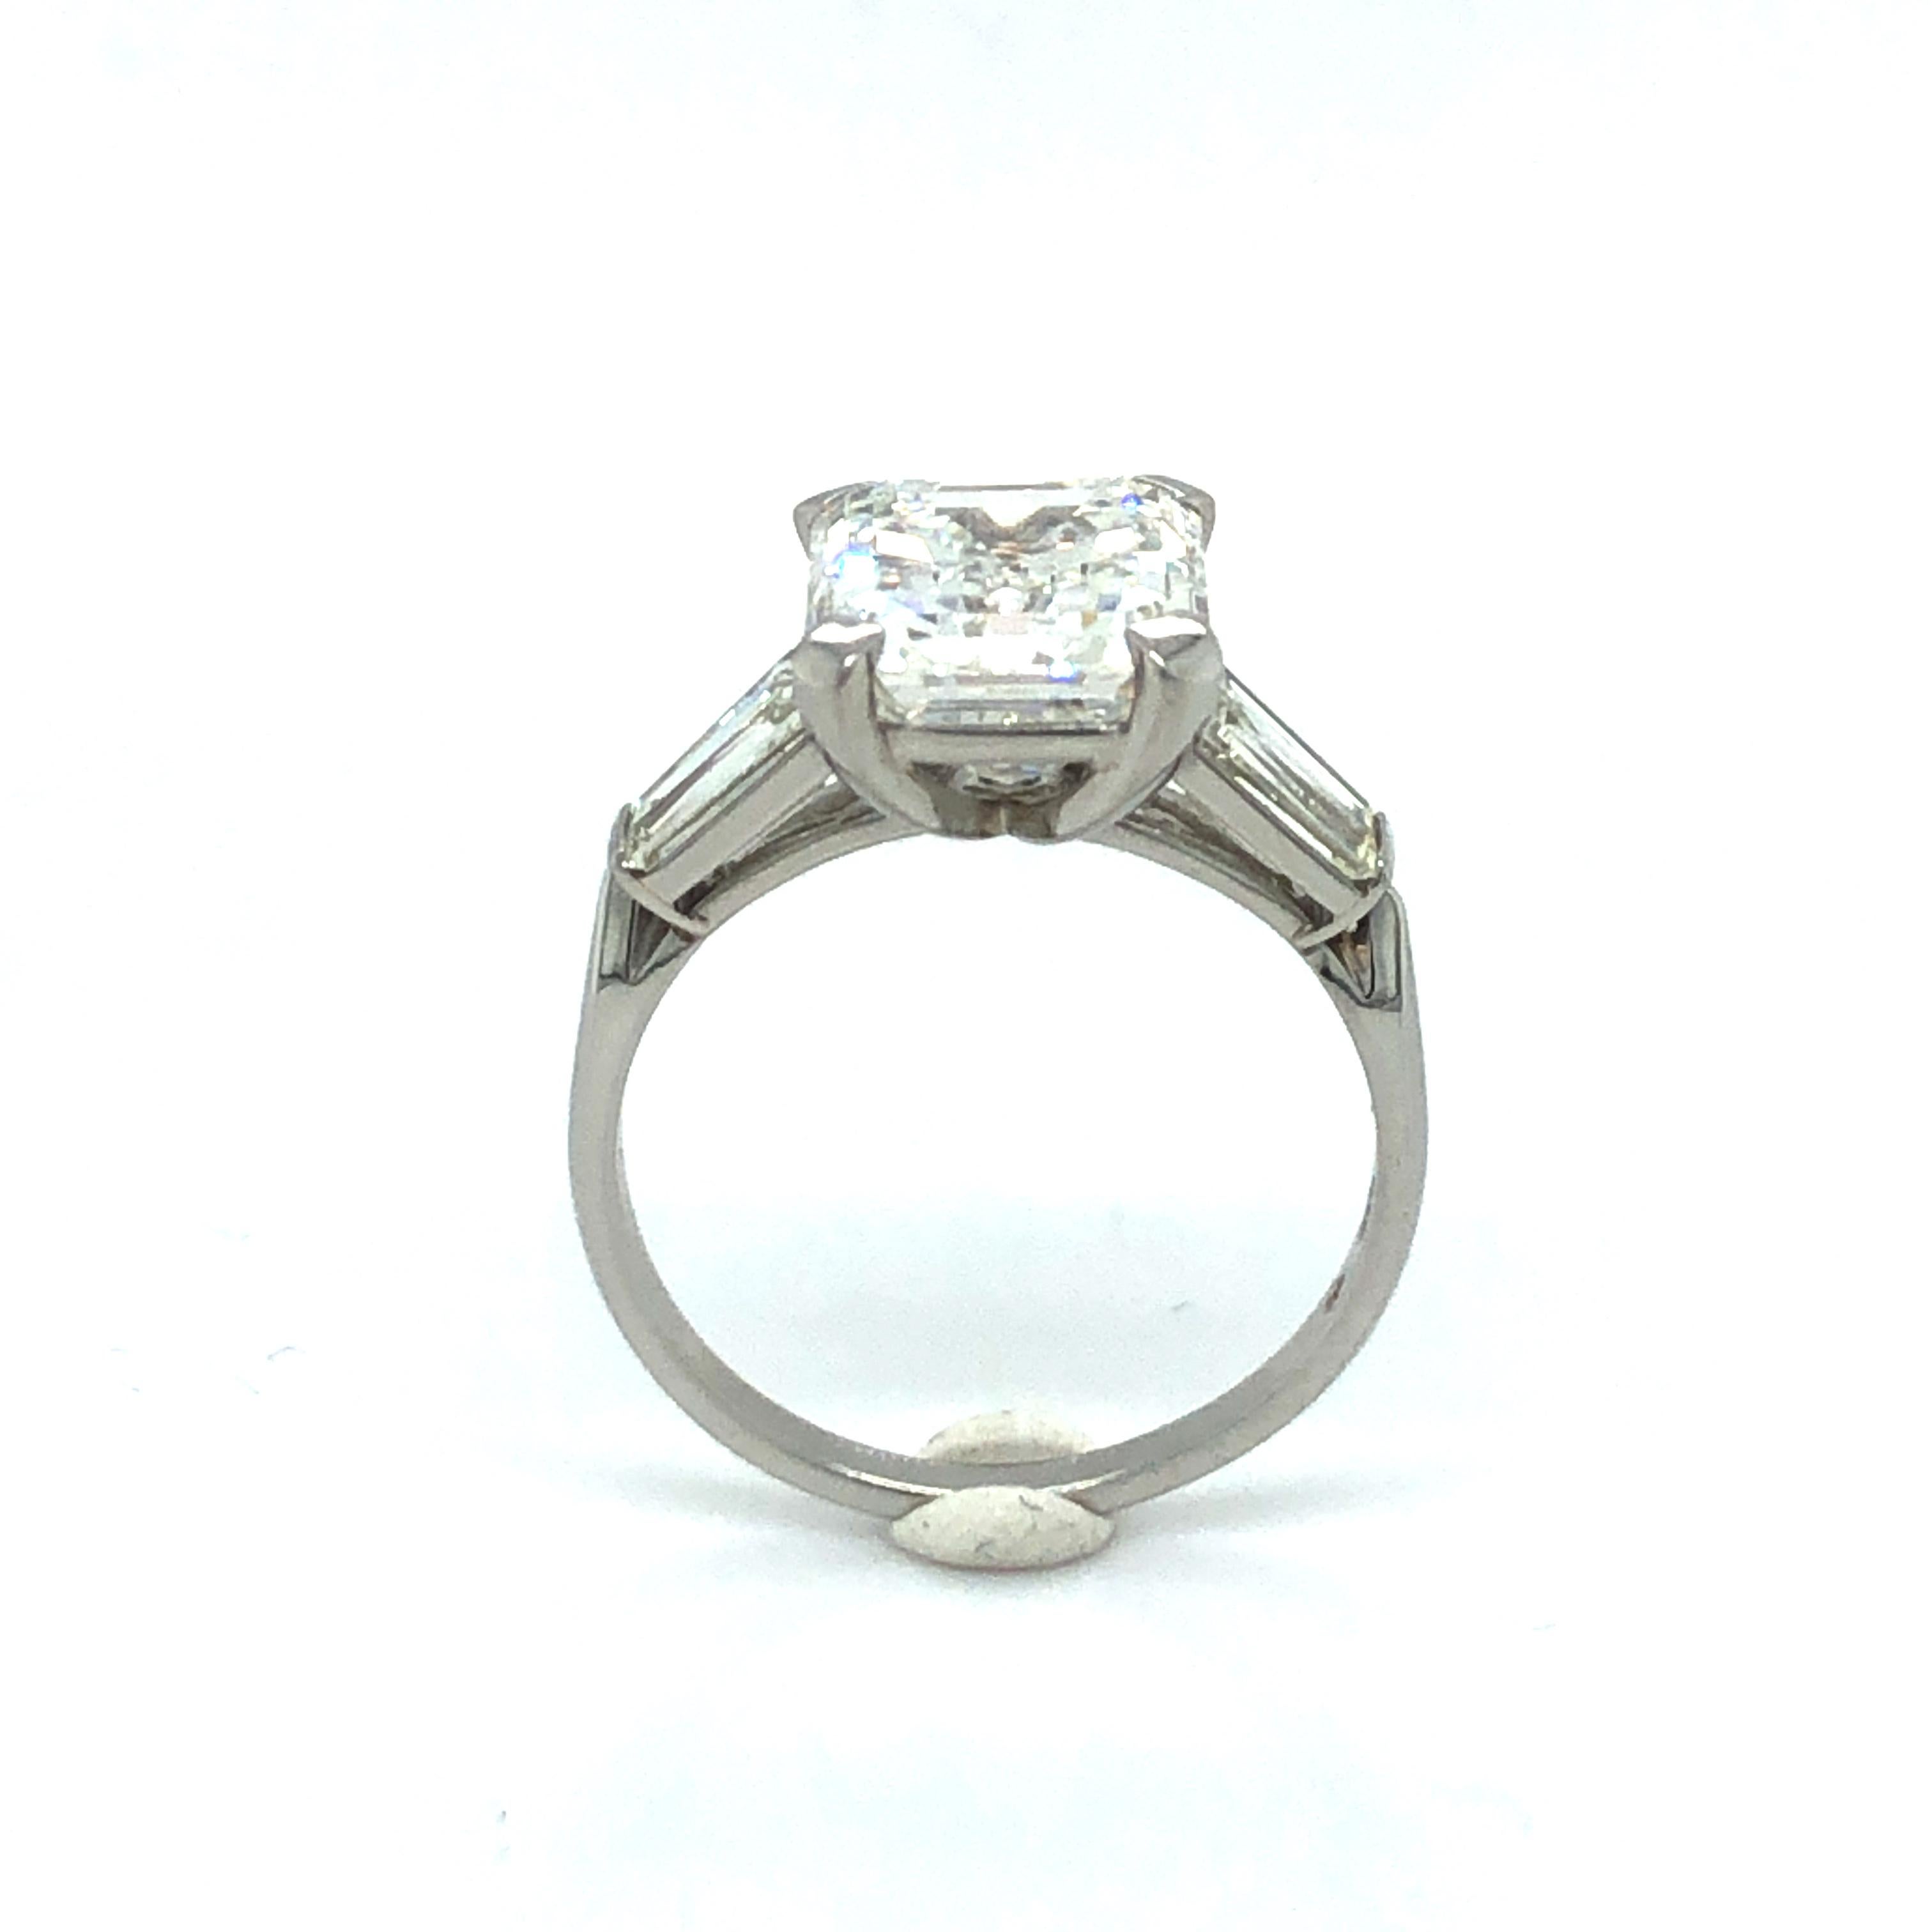 GIA Certified 4.19 Carat Emerald Cut Diamond Ring in Platinum 950 7